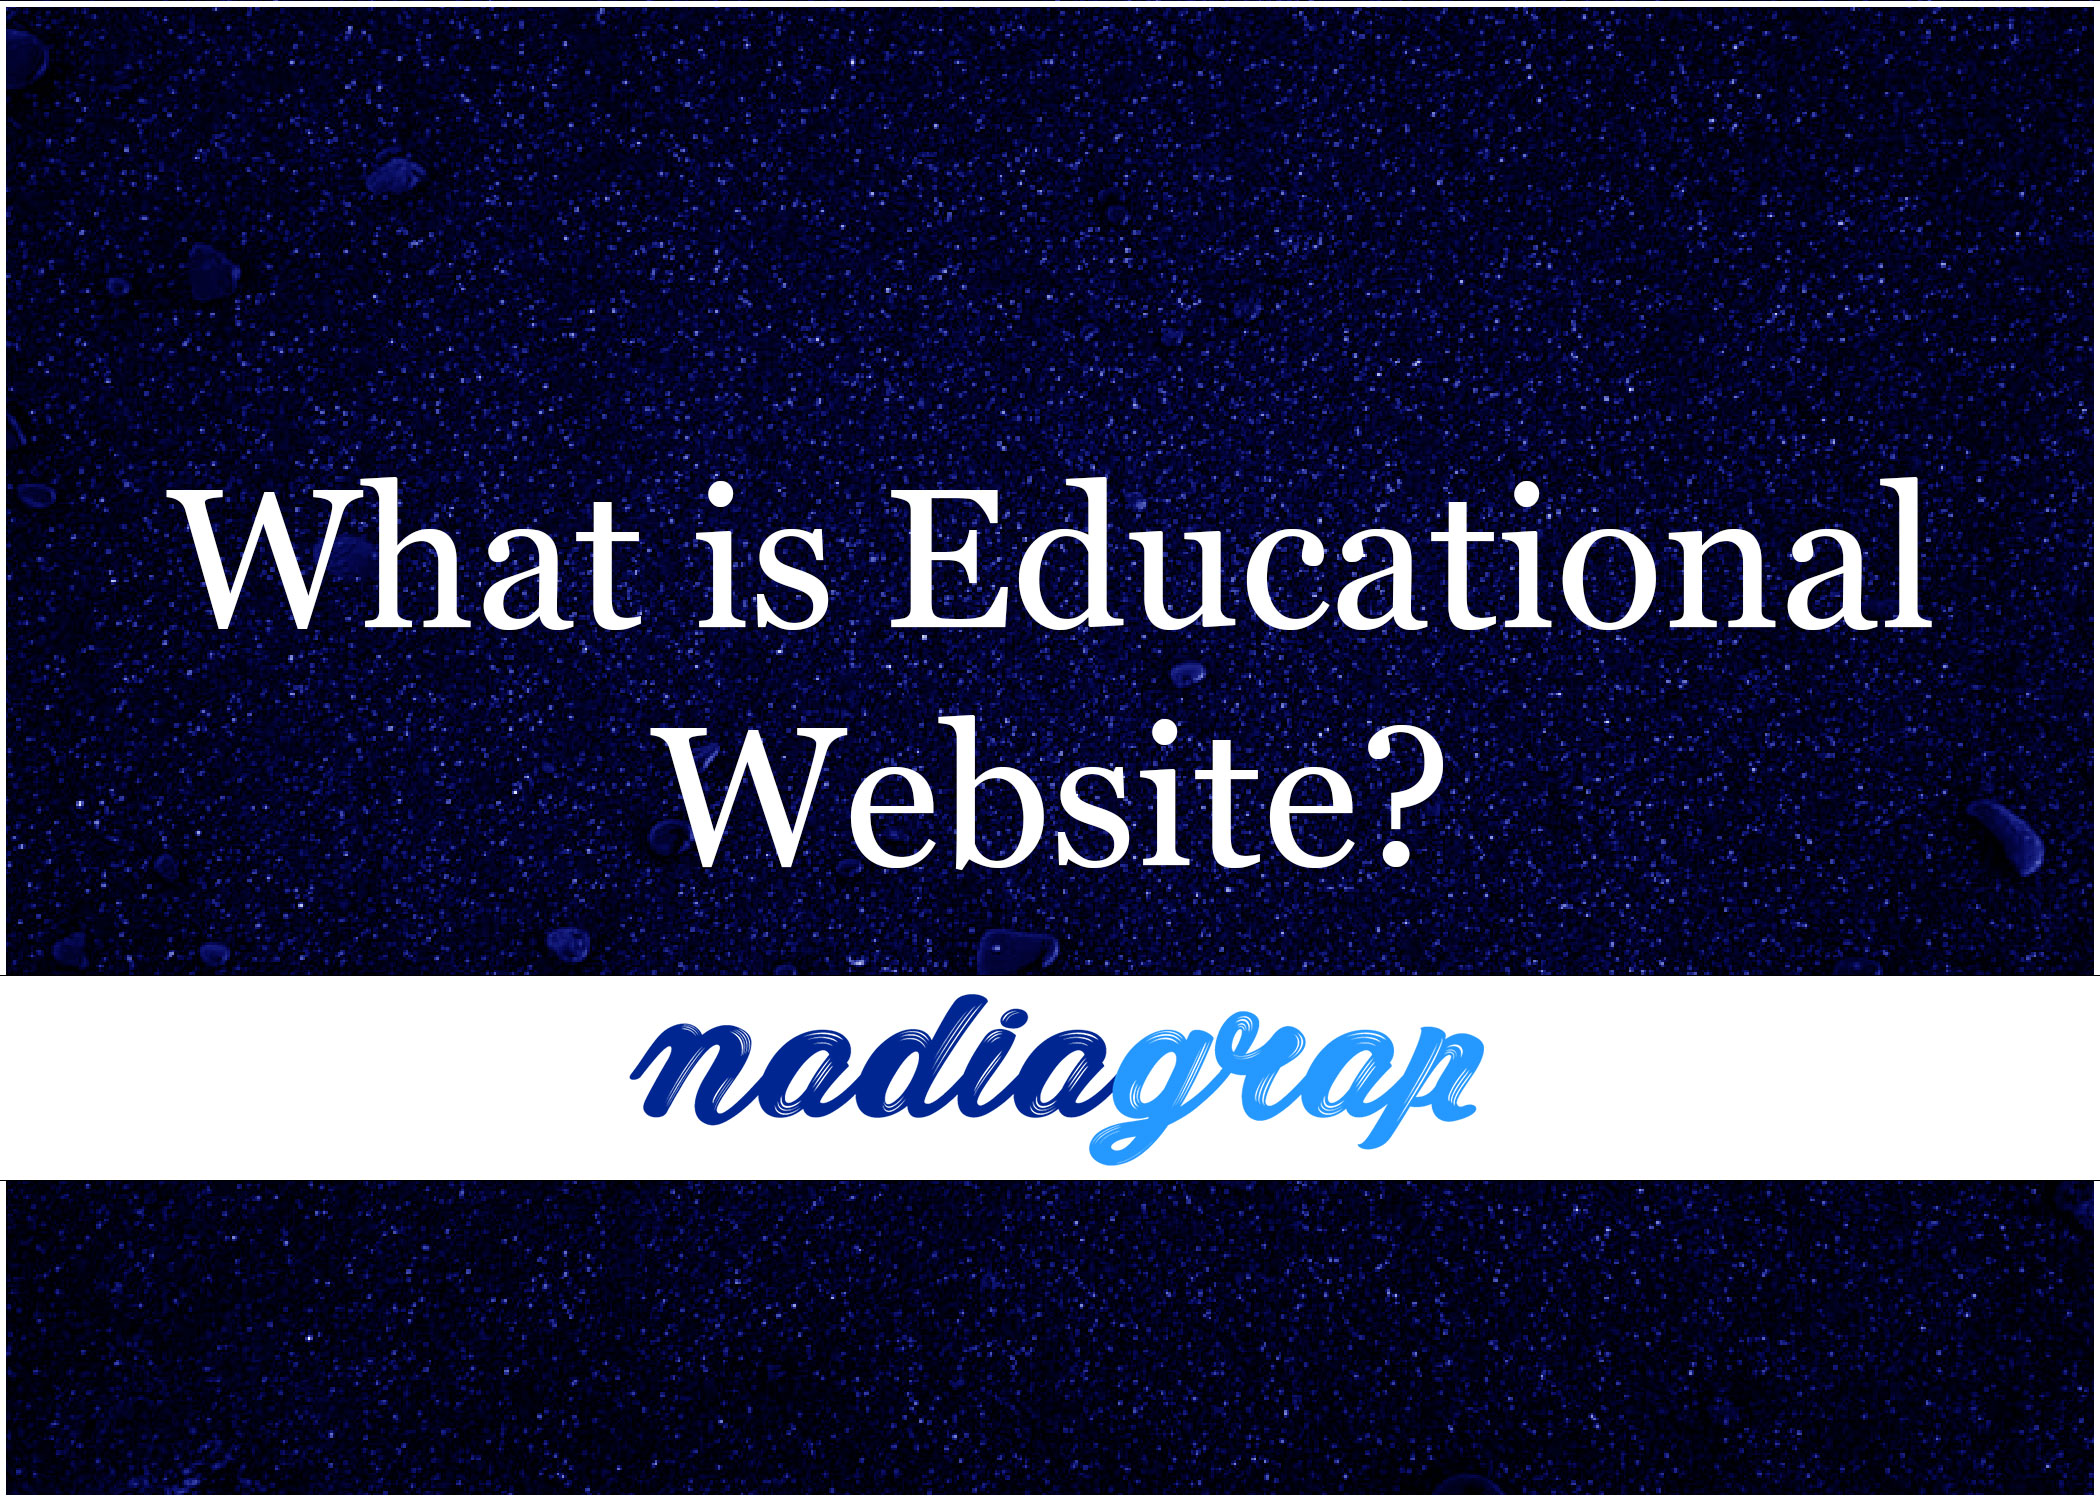 Educational websites